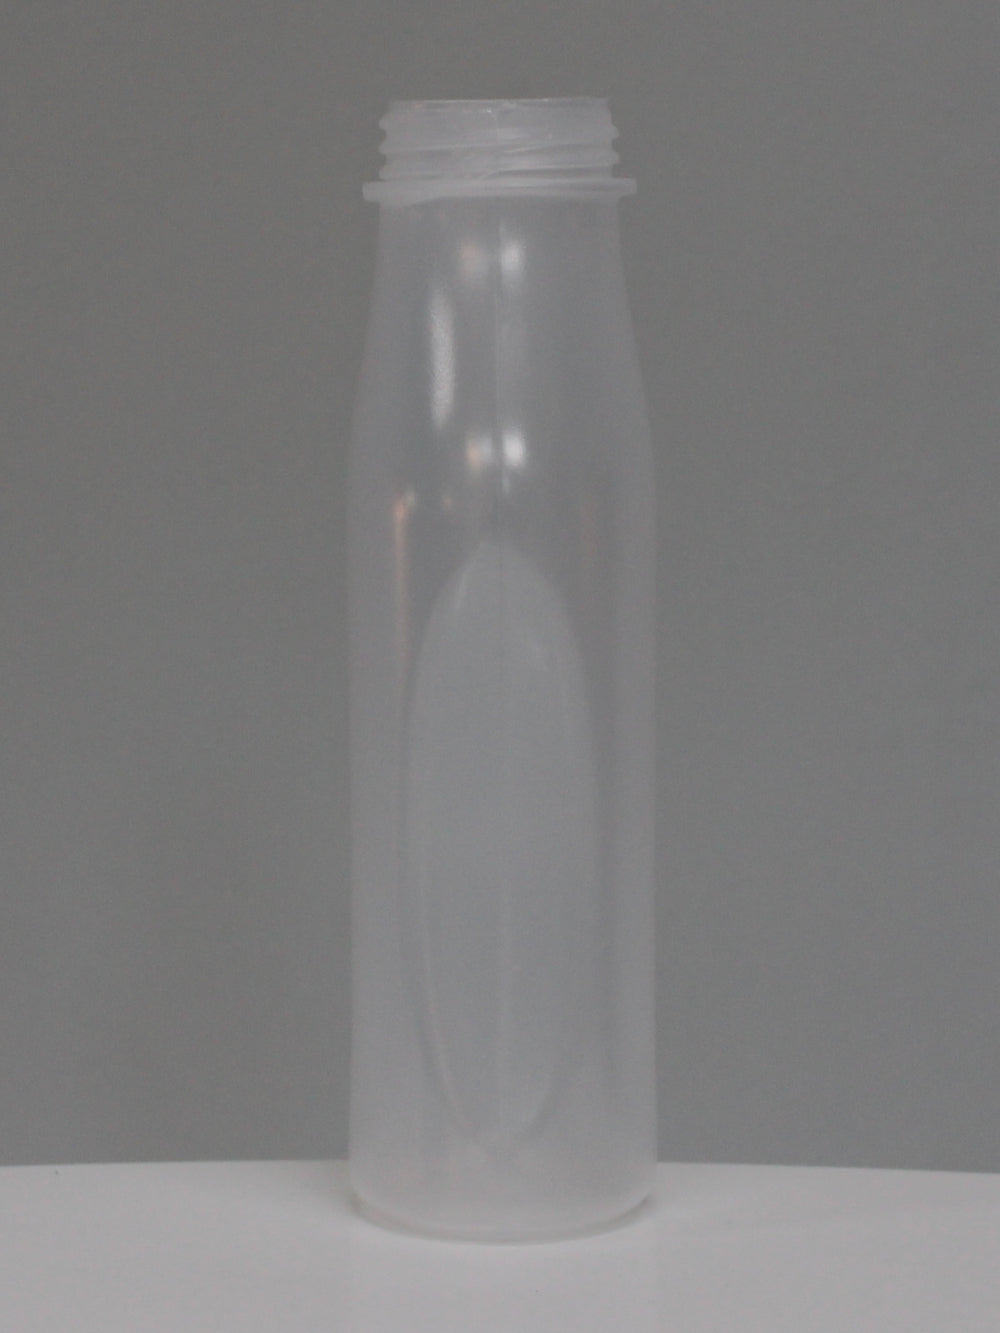 375ml Curve PP Sauce Bottle - (Box of 100 units)